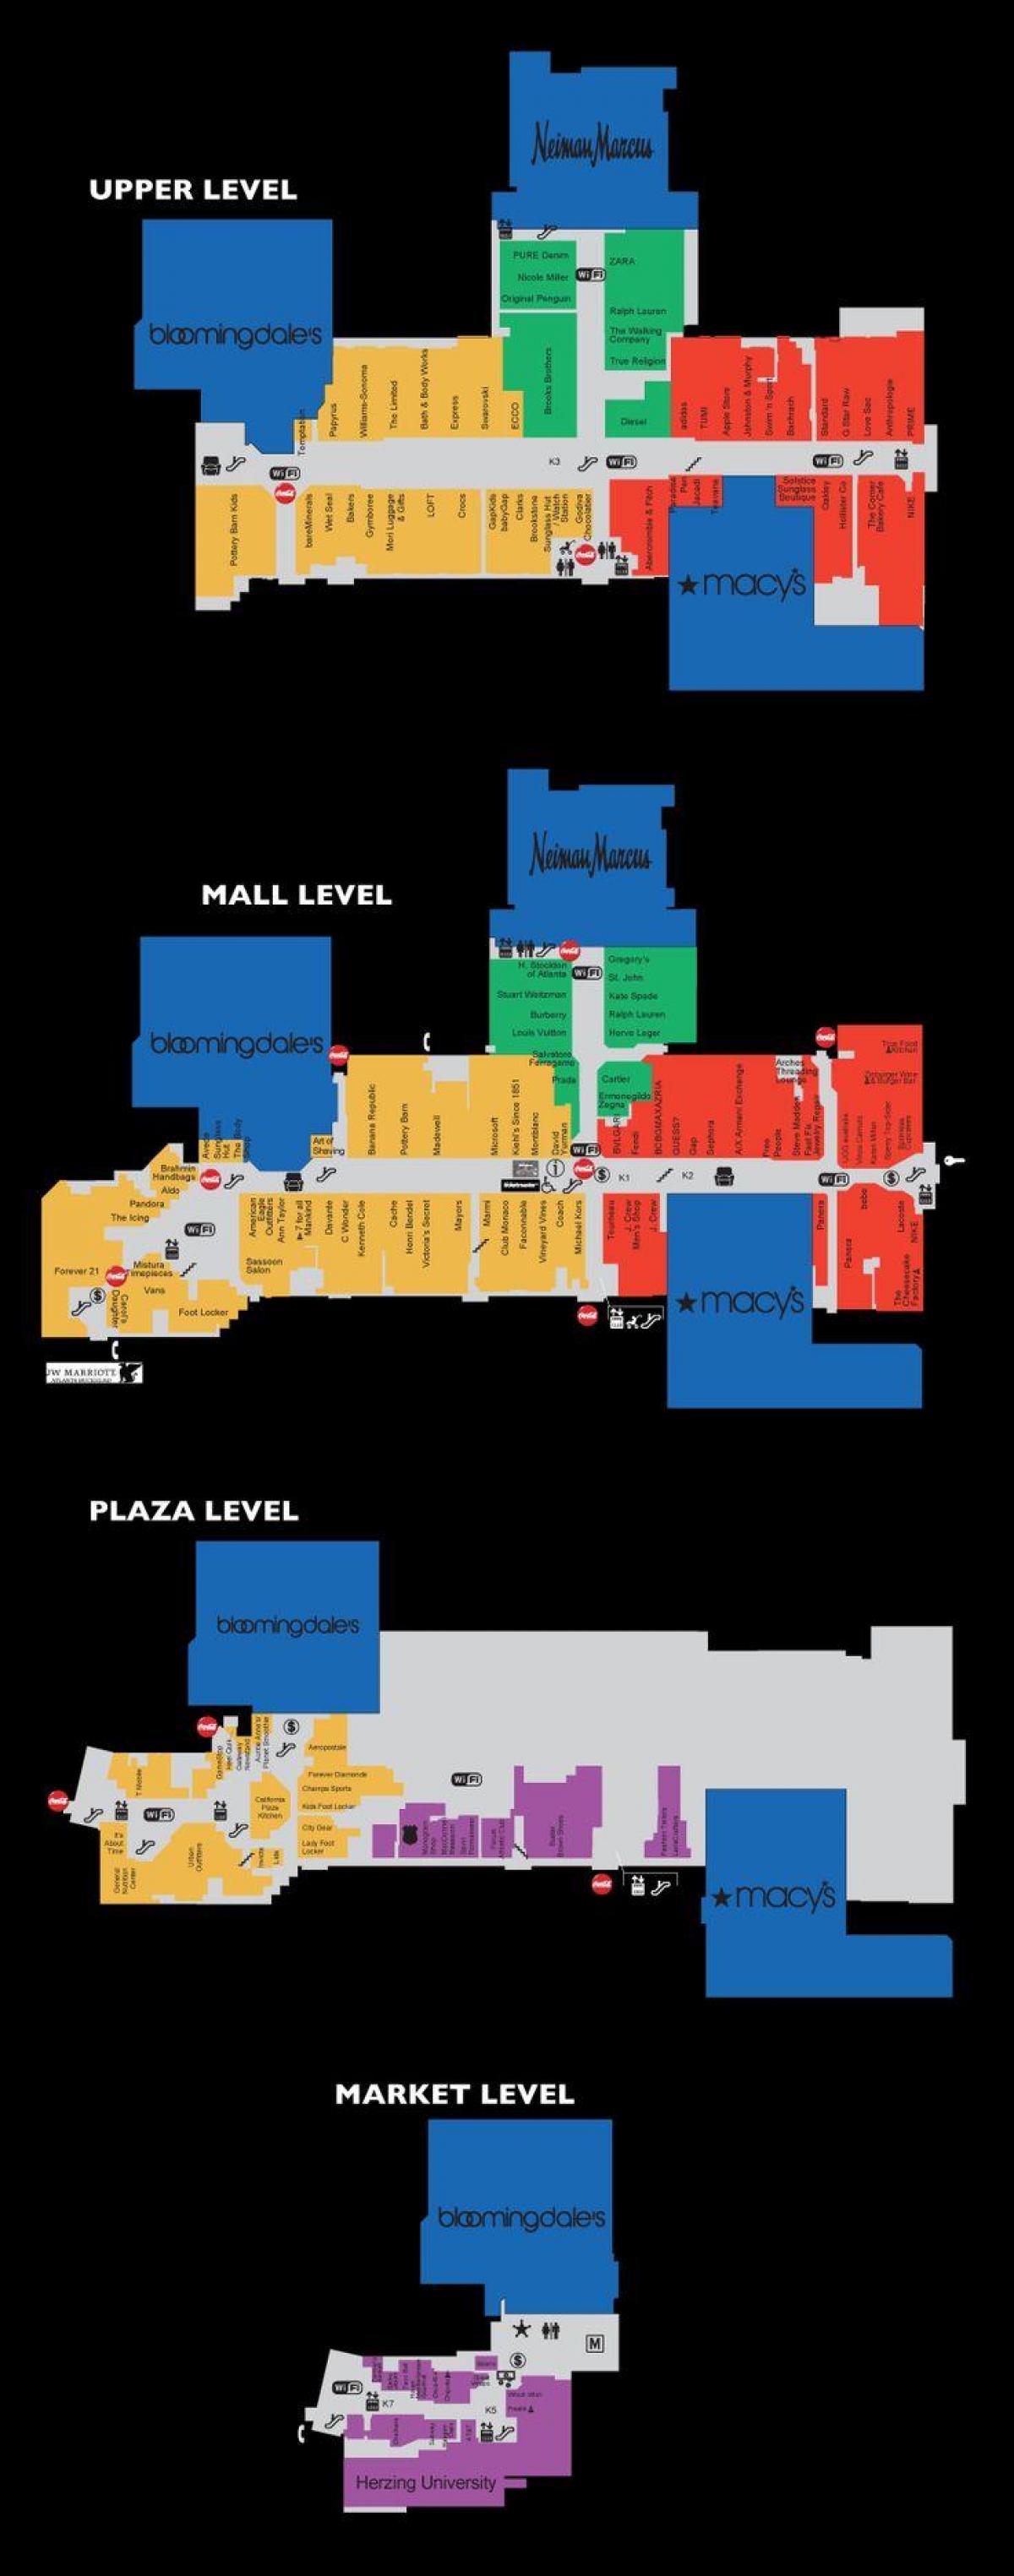 Lenox-square Mall karti